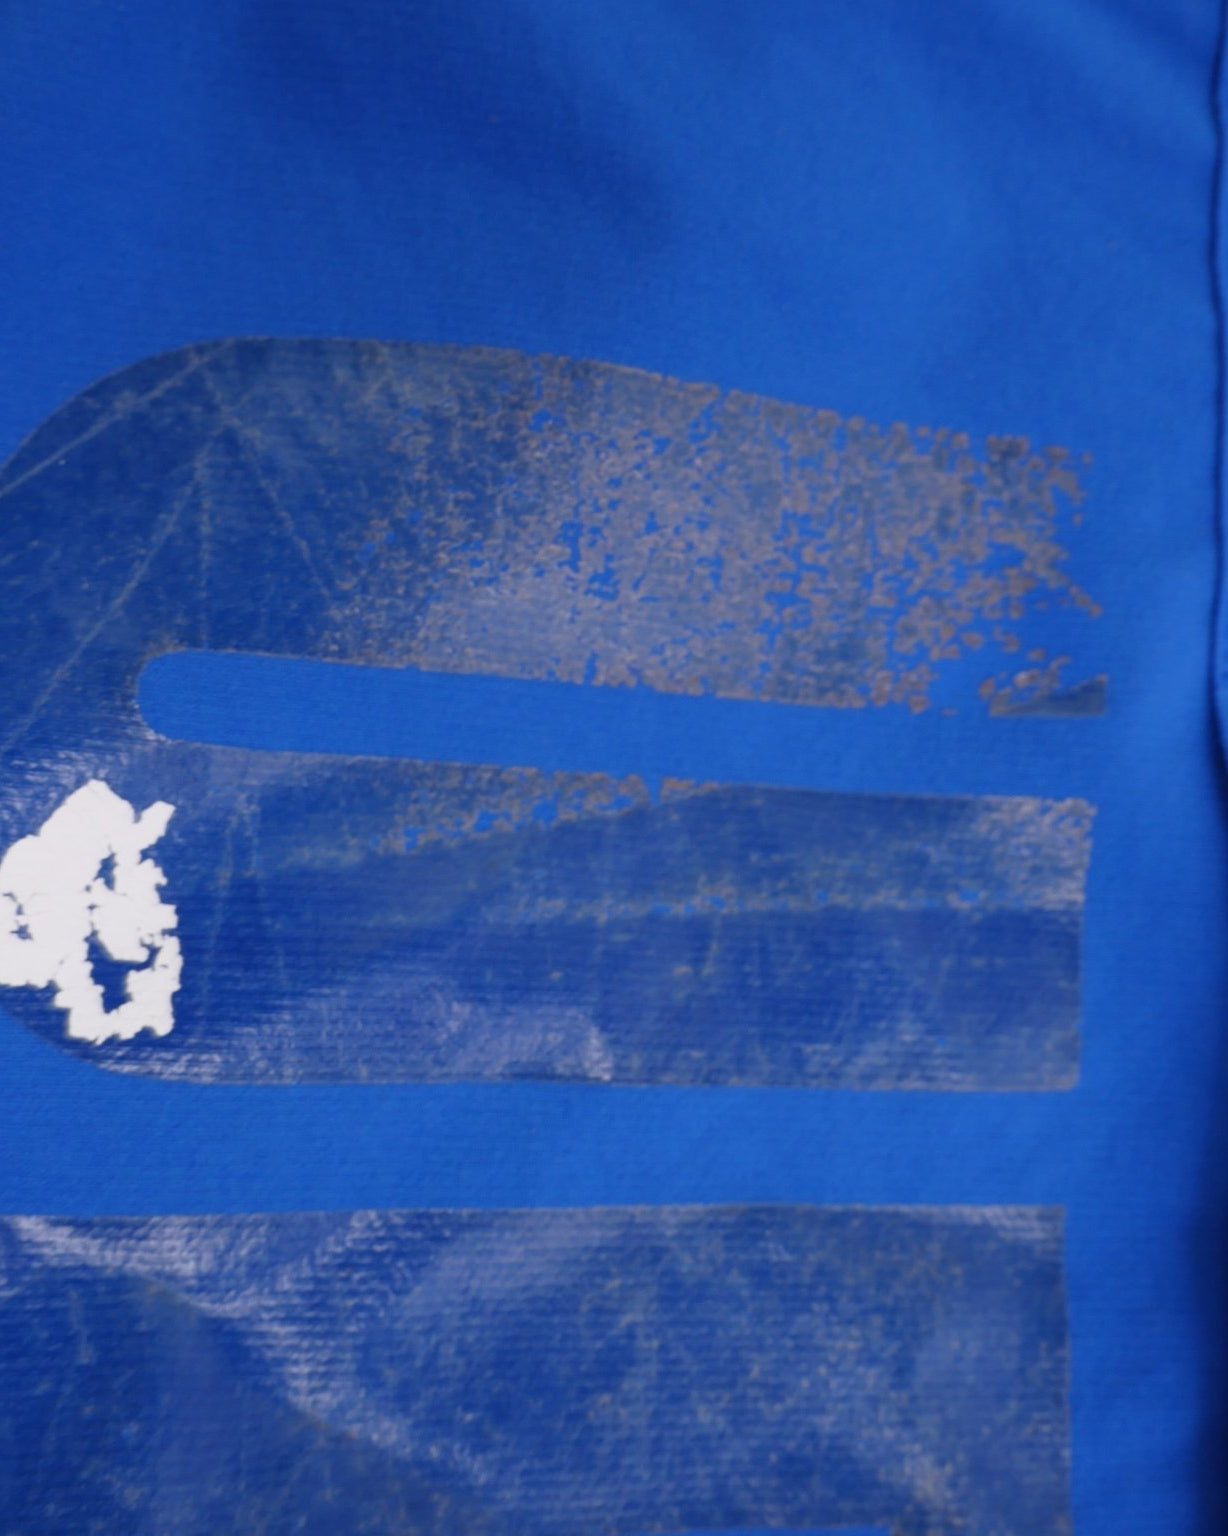 nike embroidered Logo 'University of Playmouth' blue Track Jacket - Peeces